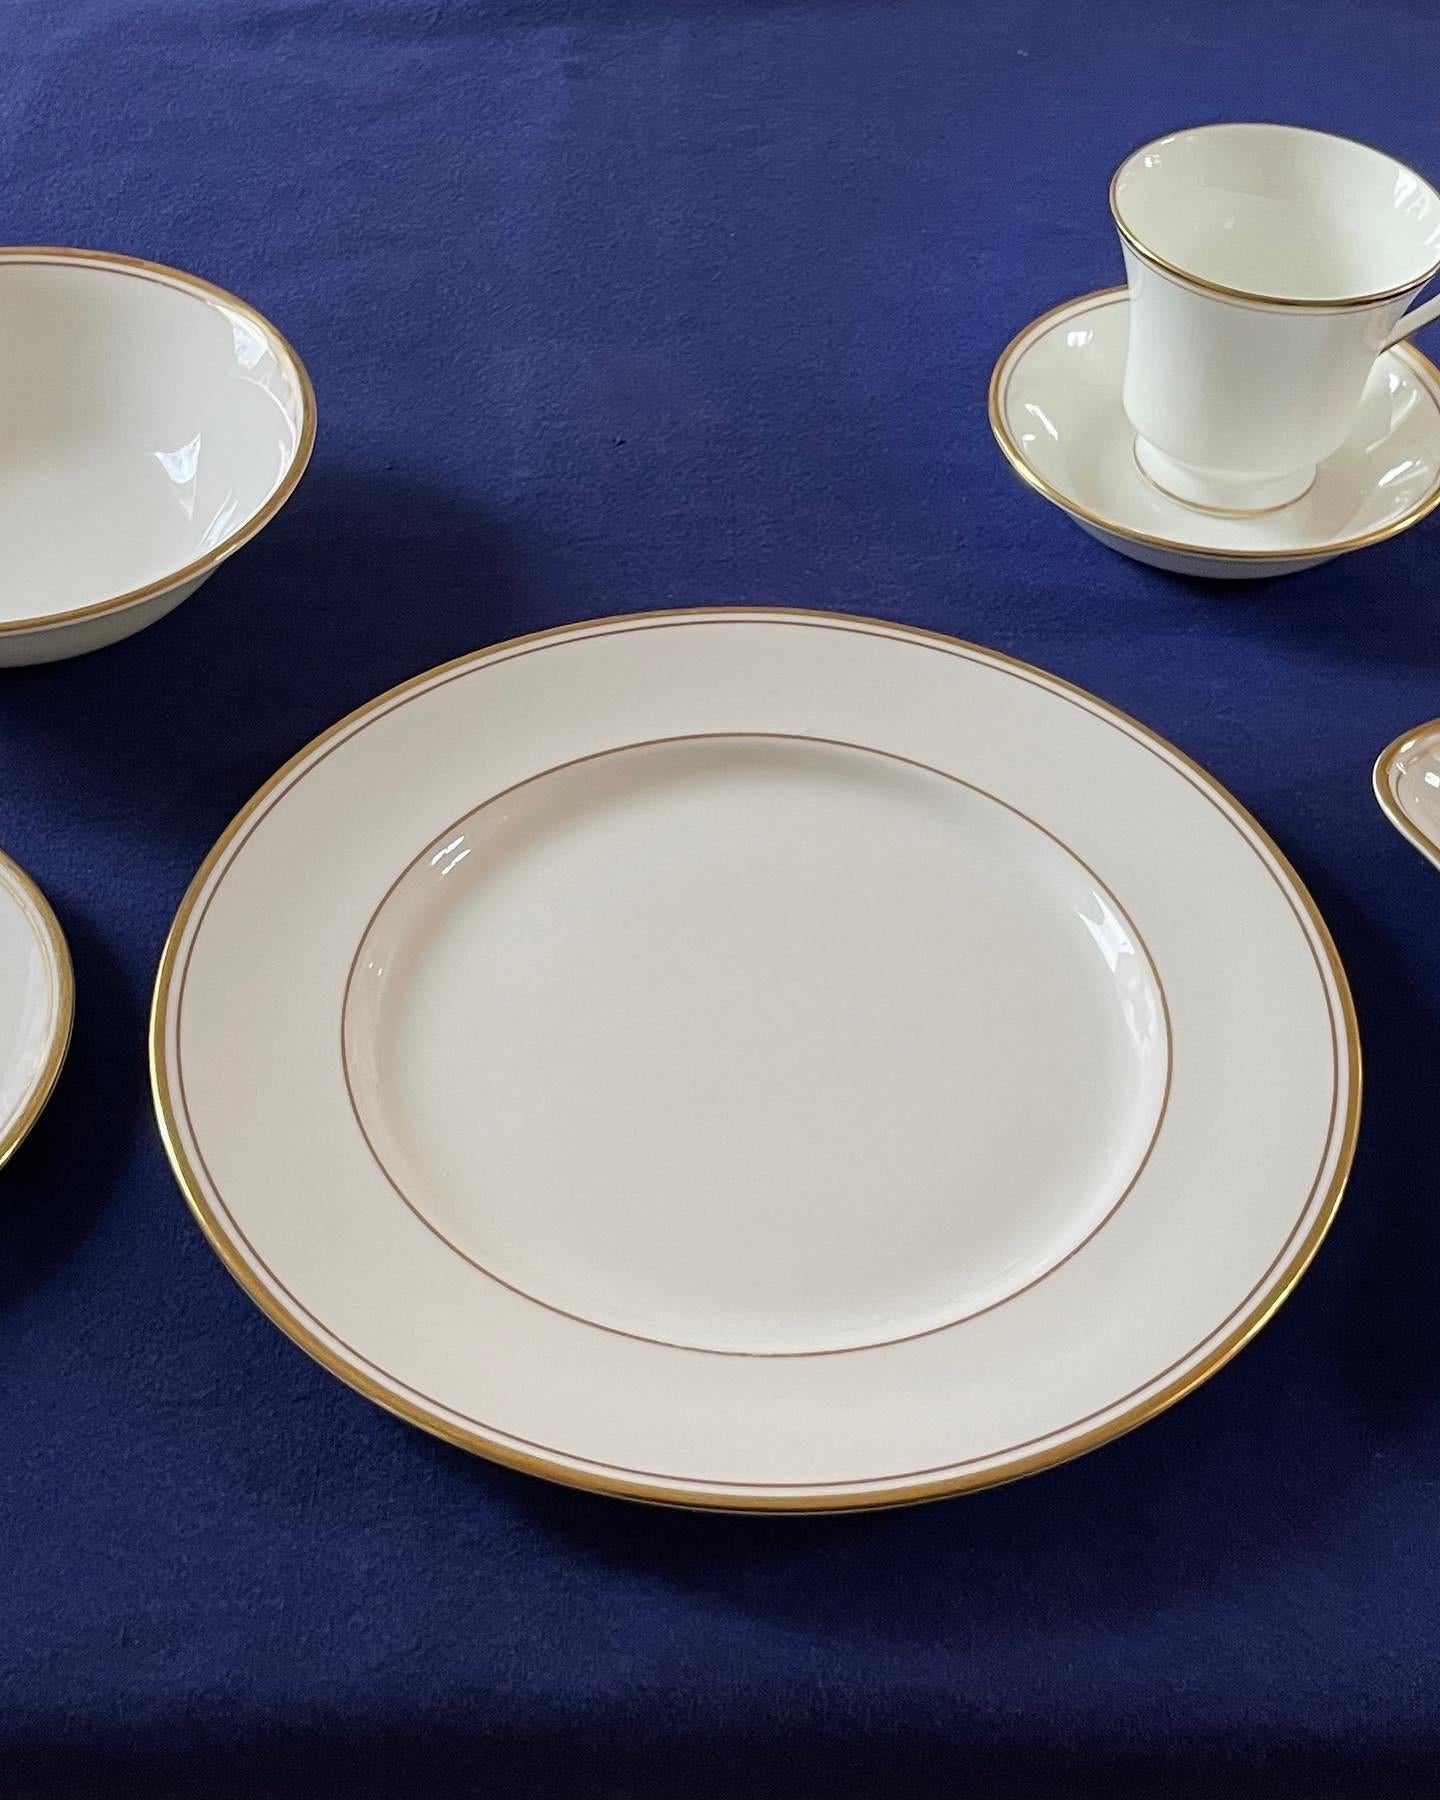 Porcelain Aynsley Fine Bone China Table Service for 12 people, Corona Gold Model 